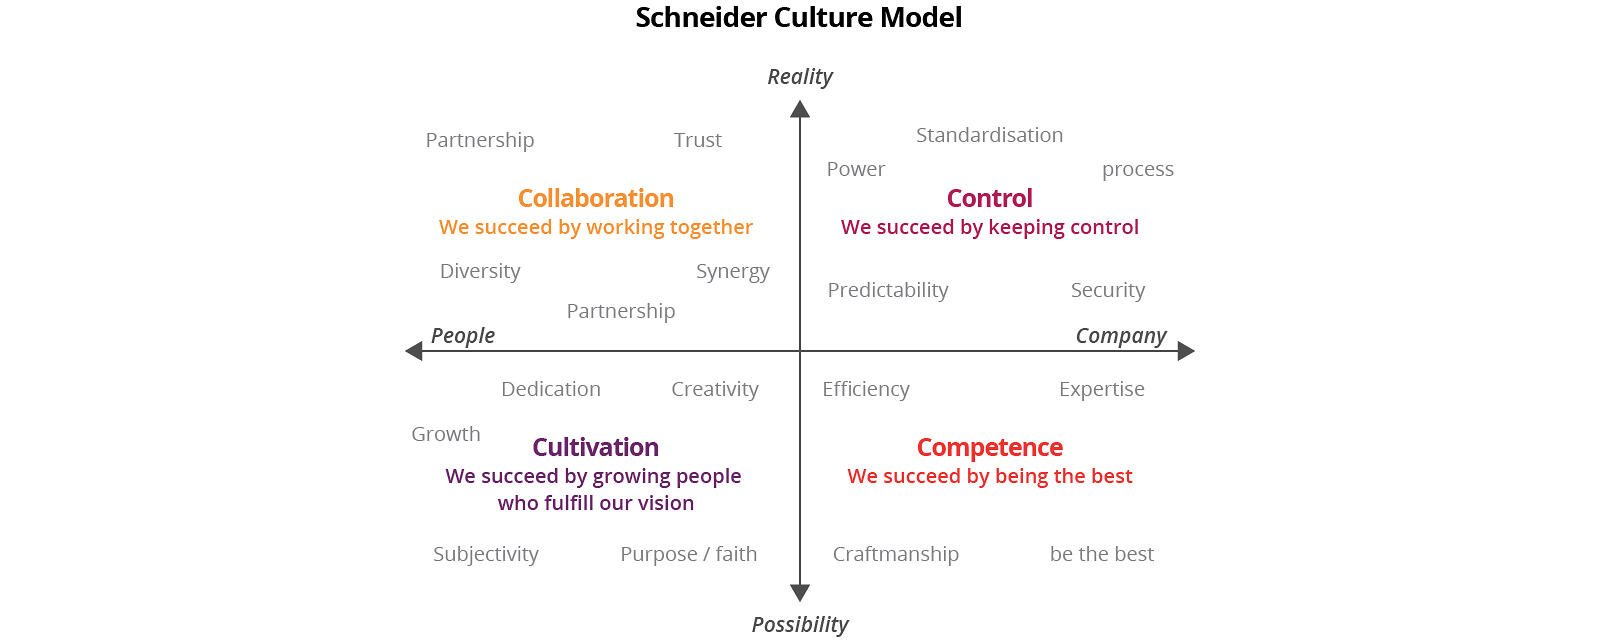 Schneider Culture Model